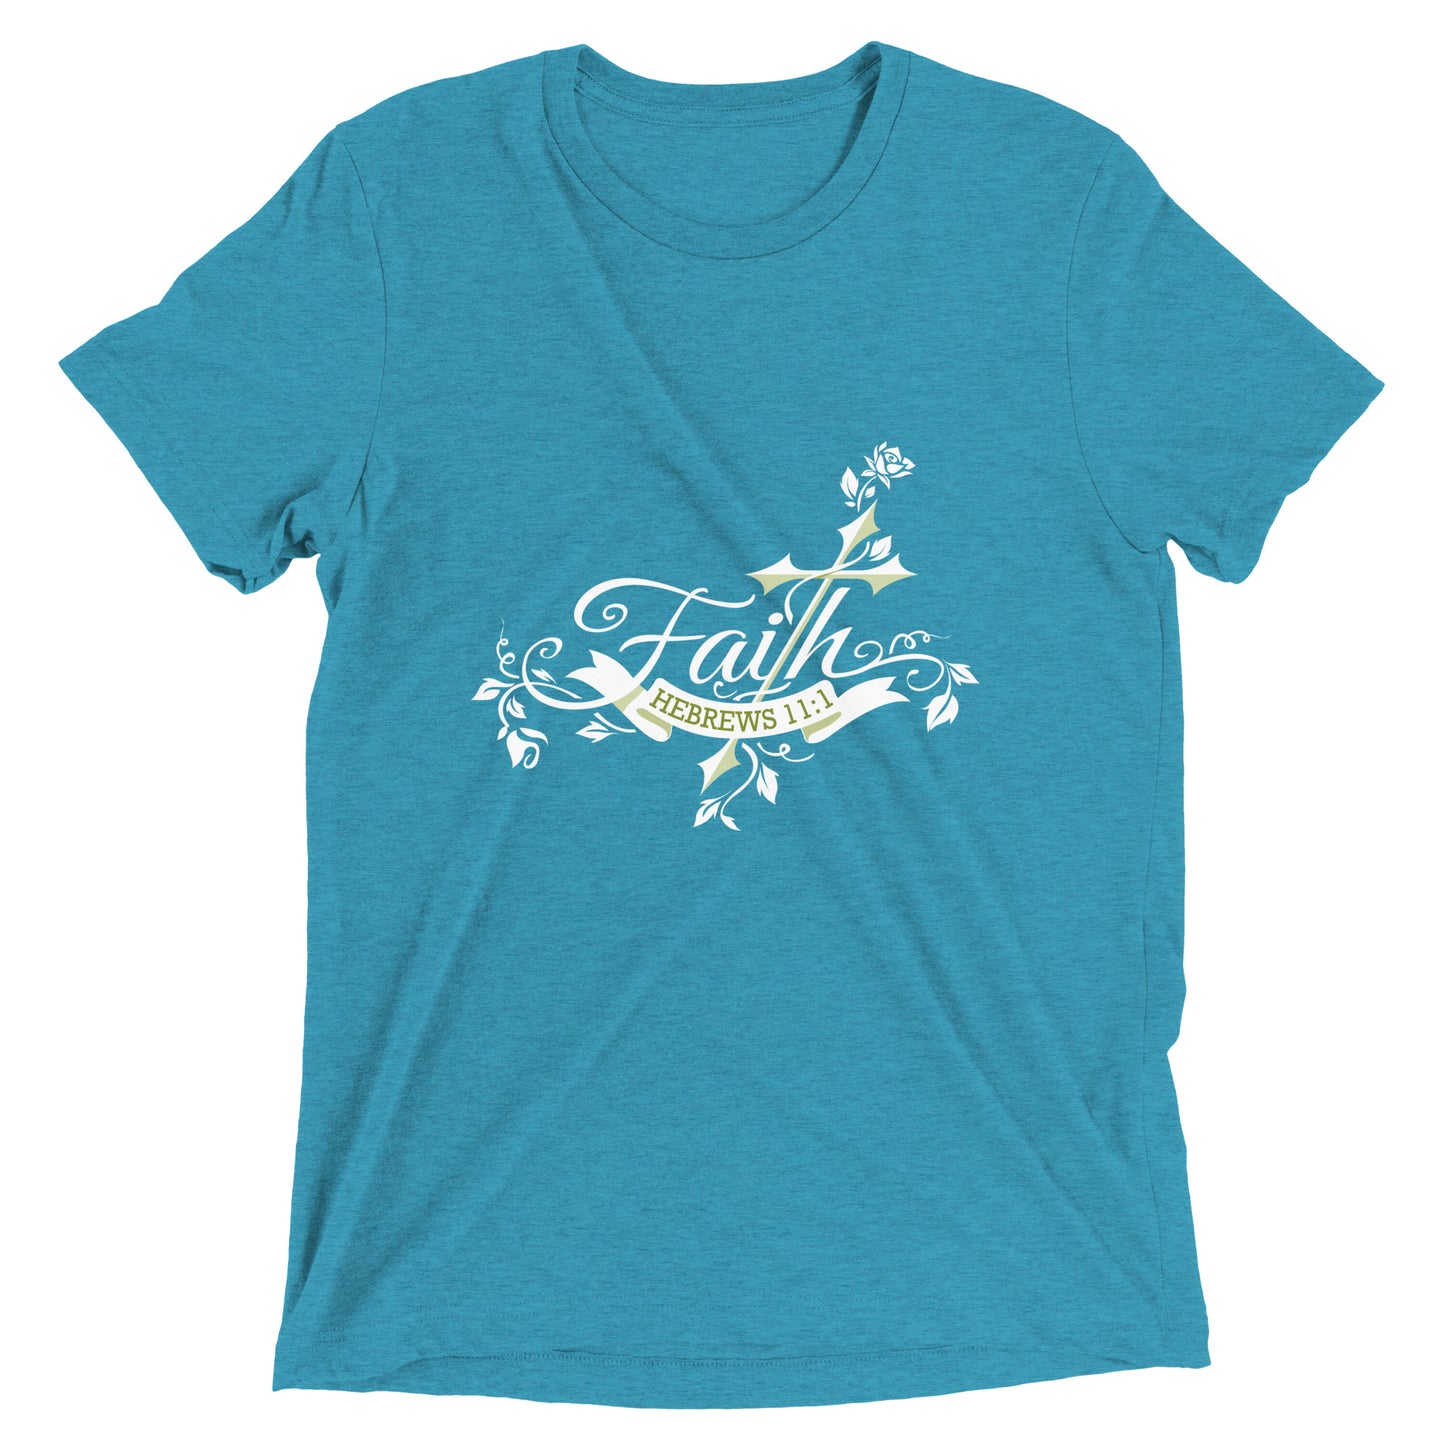 Faith - Short sleeve t-shirt - View All Colors